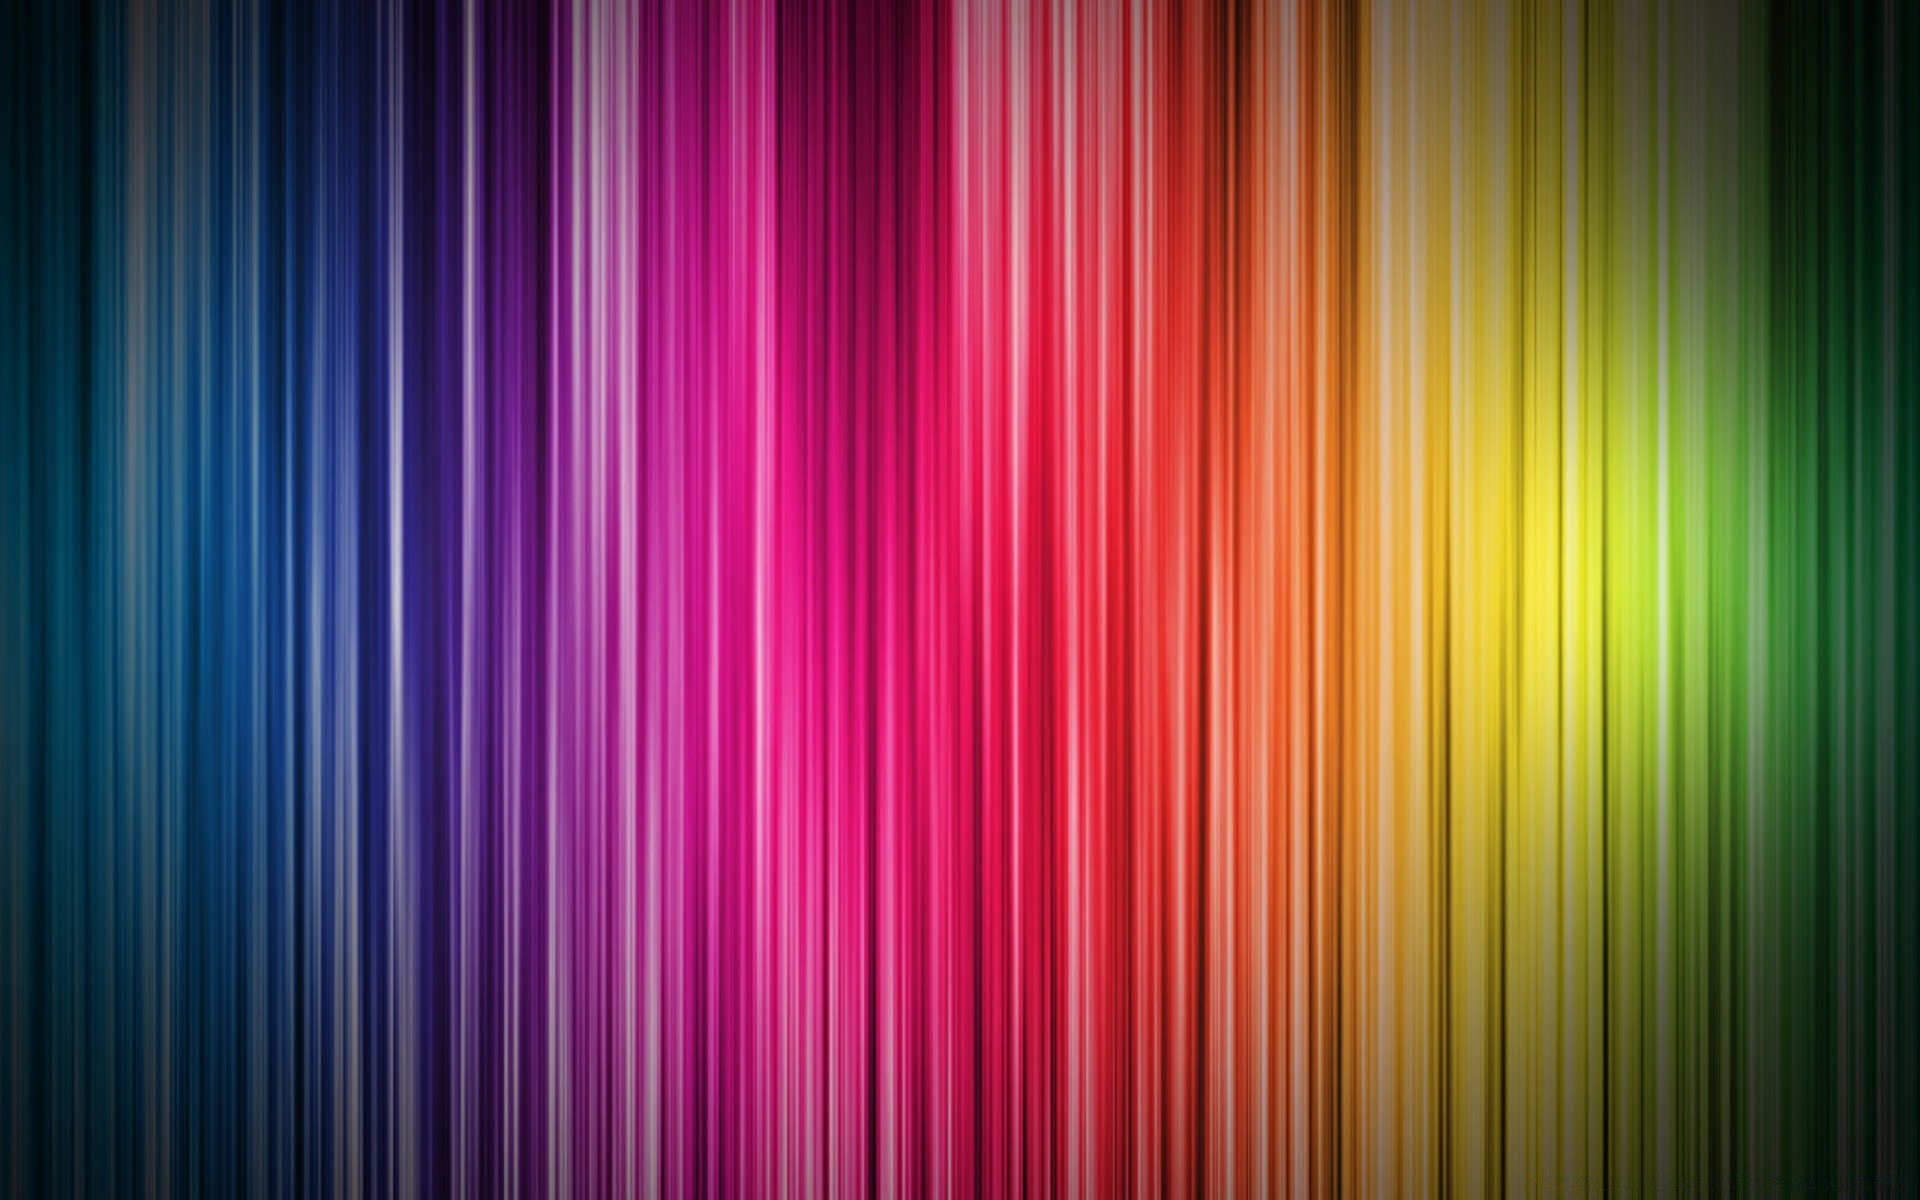 rainbow wallpaper abstract design art background illustration texture graphic bright graphic design pattern stripe desktop decoration curtain